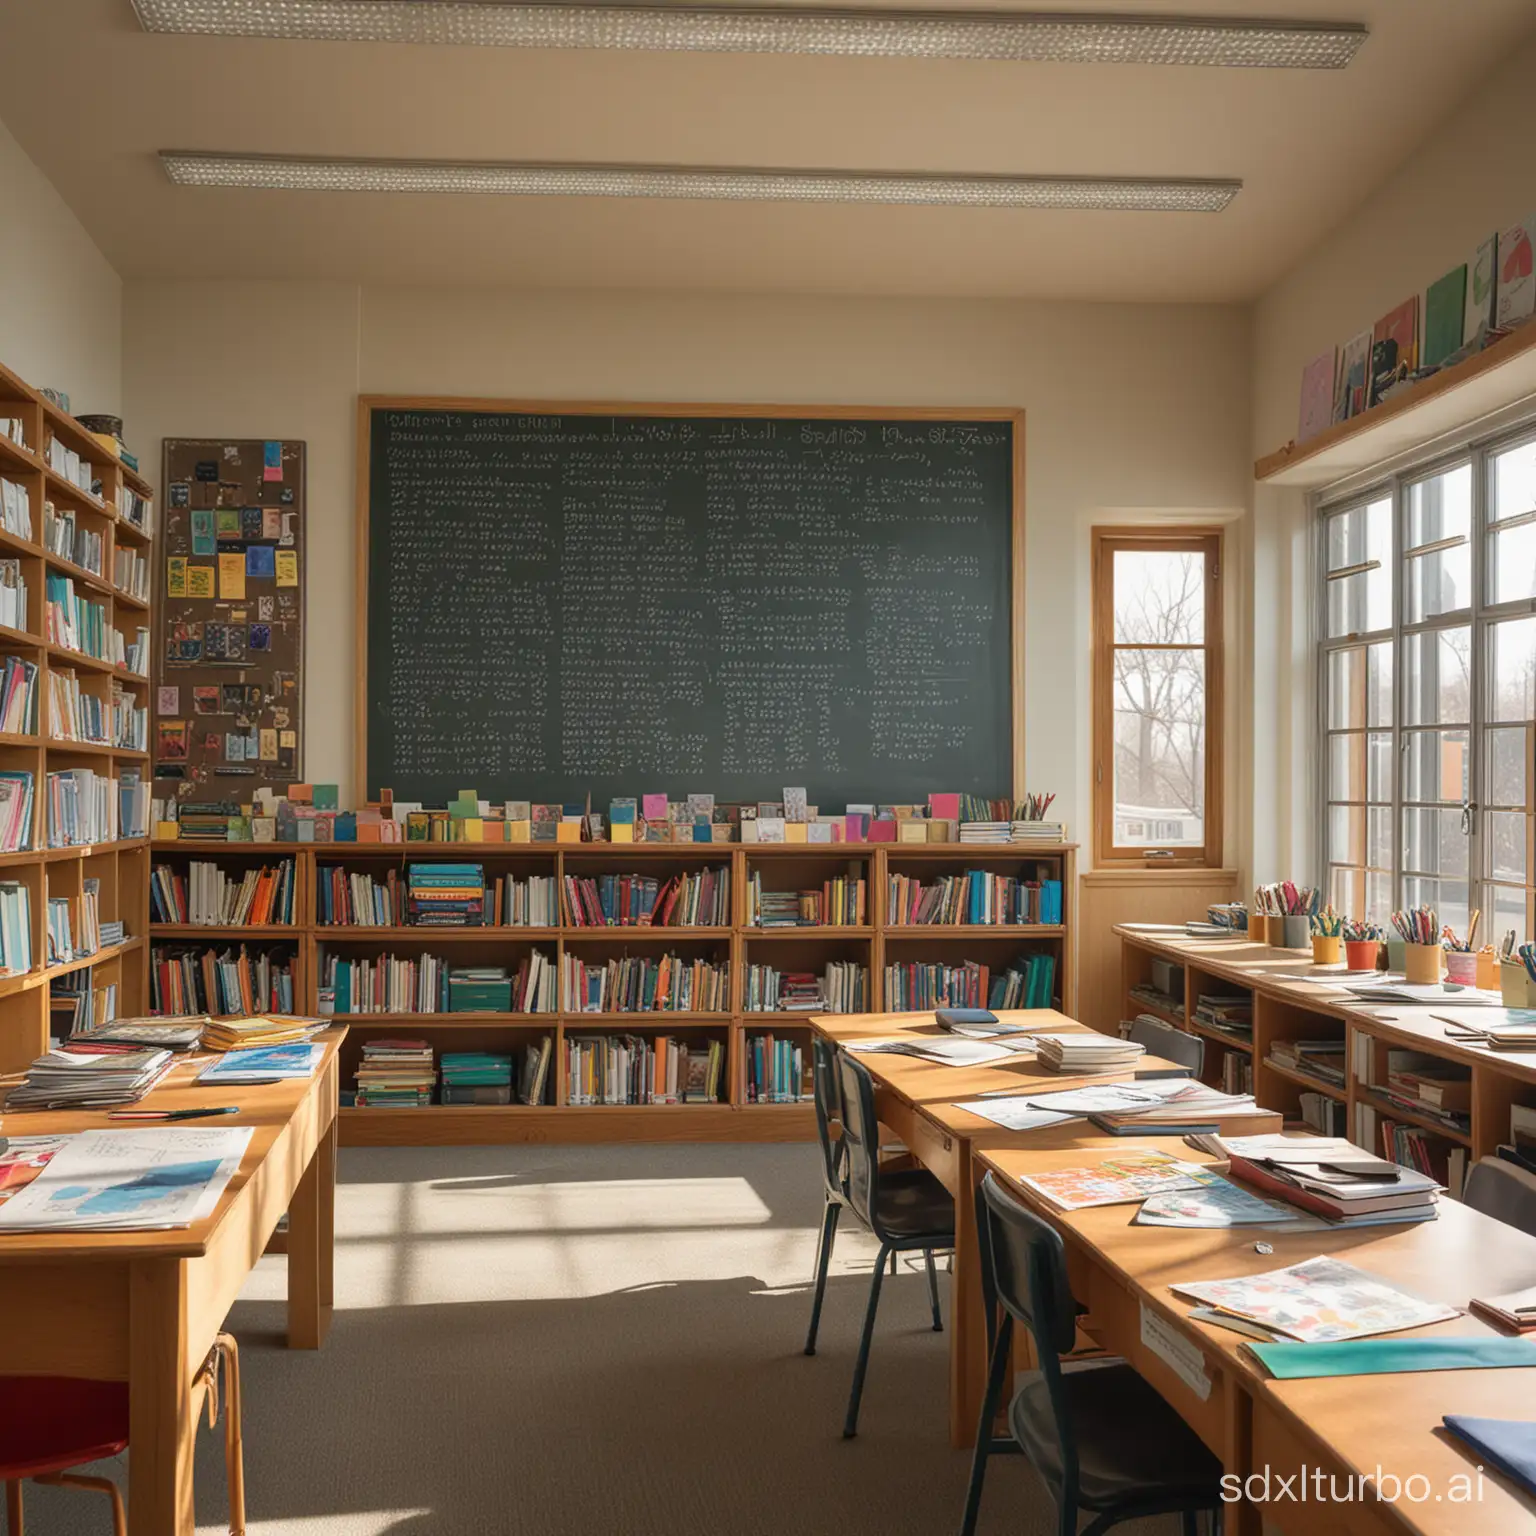 Sunlit-Classroom-with-Bookshelves-and-Neat-Desks